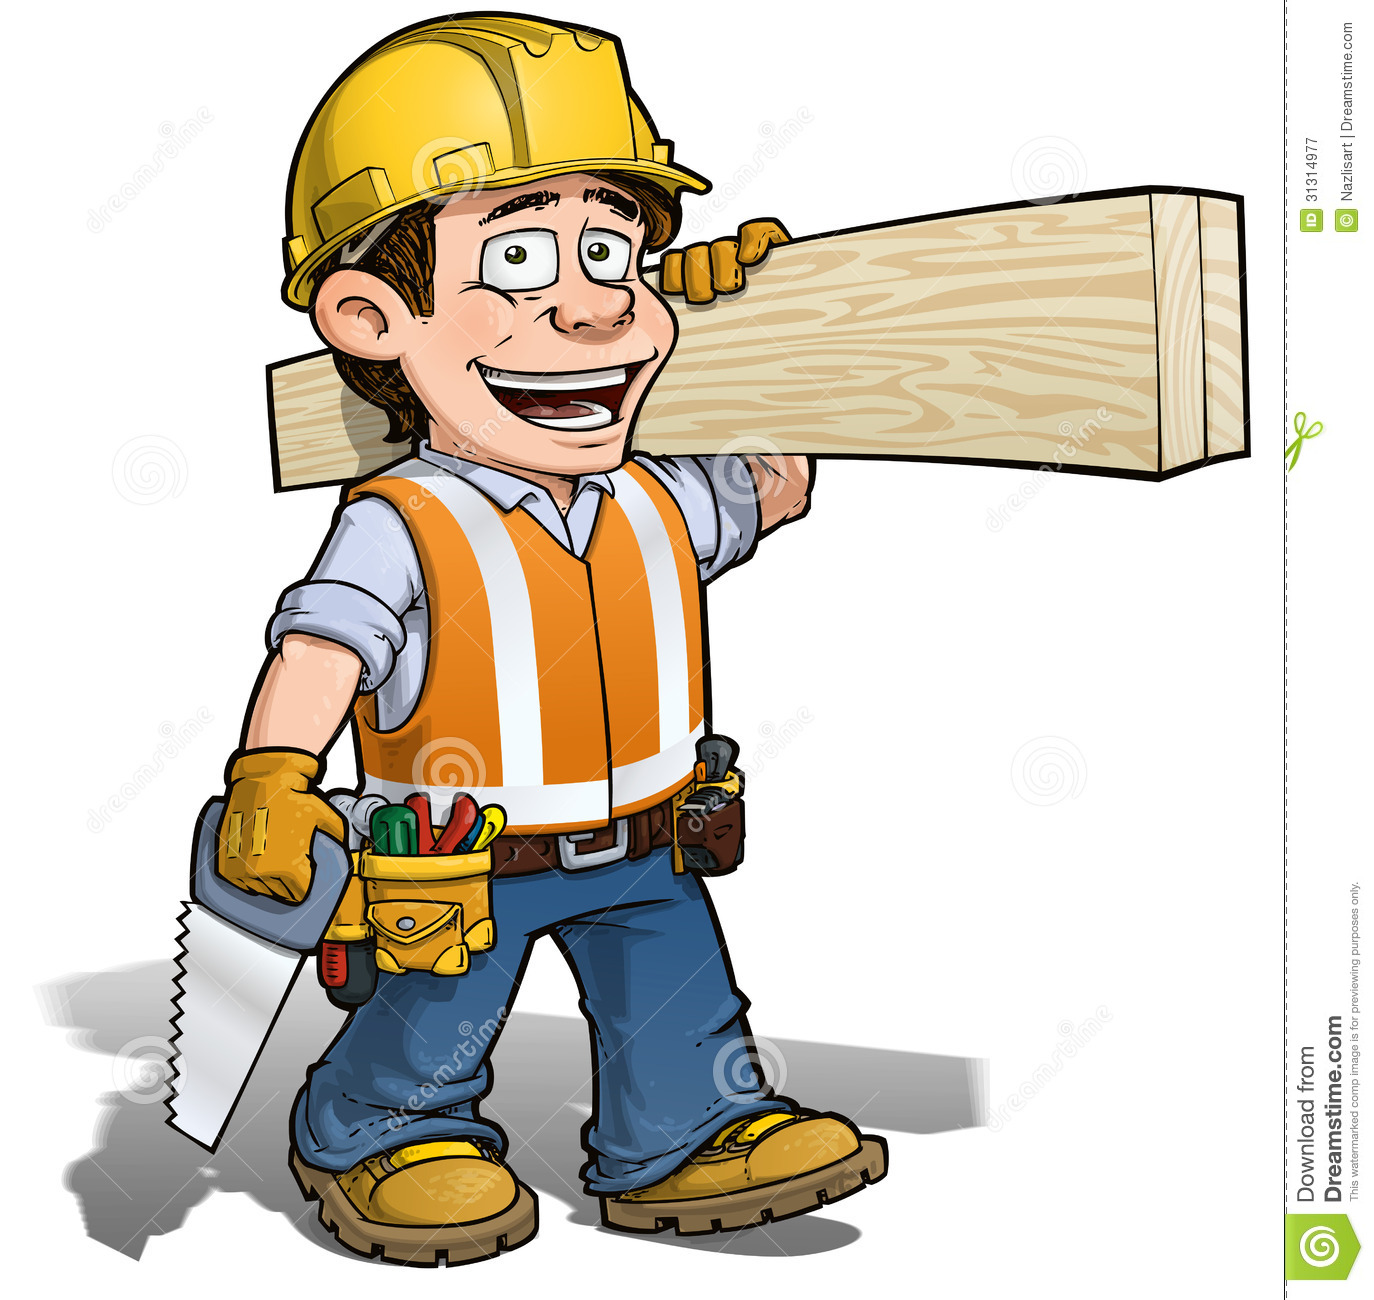 Cartoon Illustration Of A Construction Worker